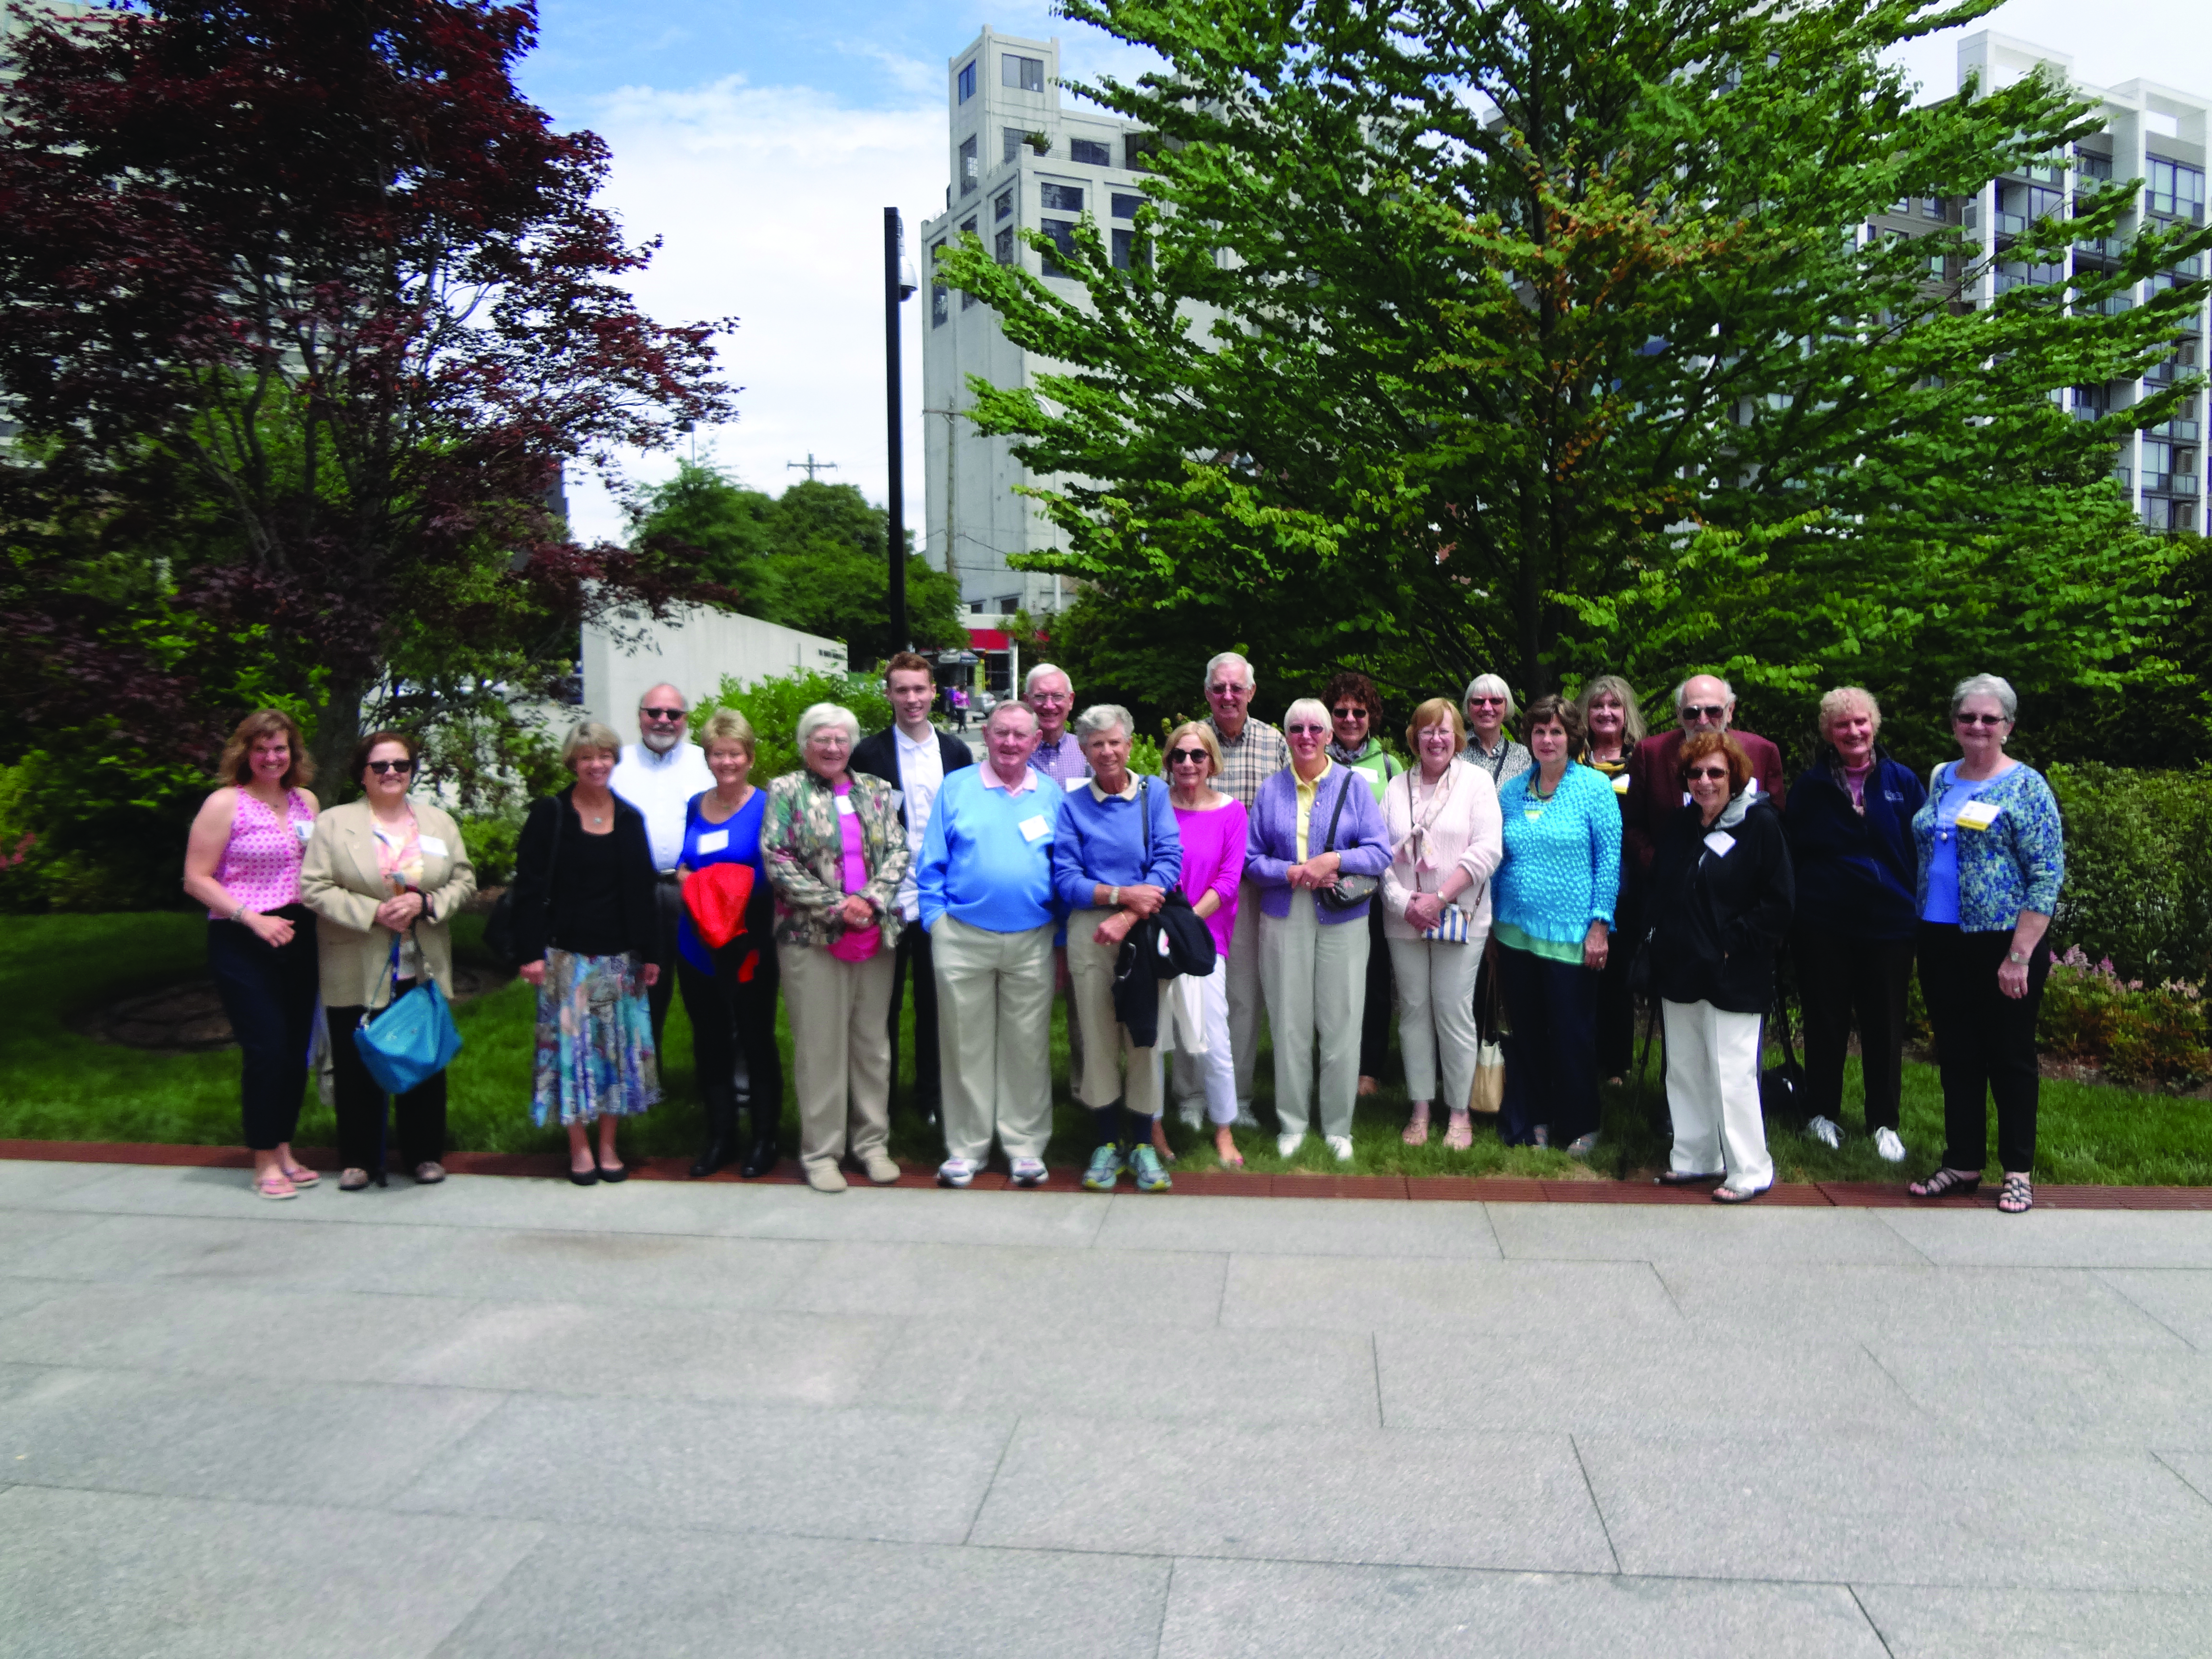 A large group of Alumni posing together outside Barnes Foundation.